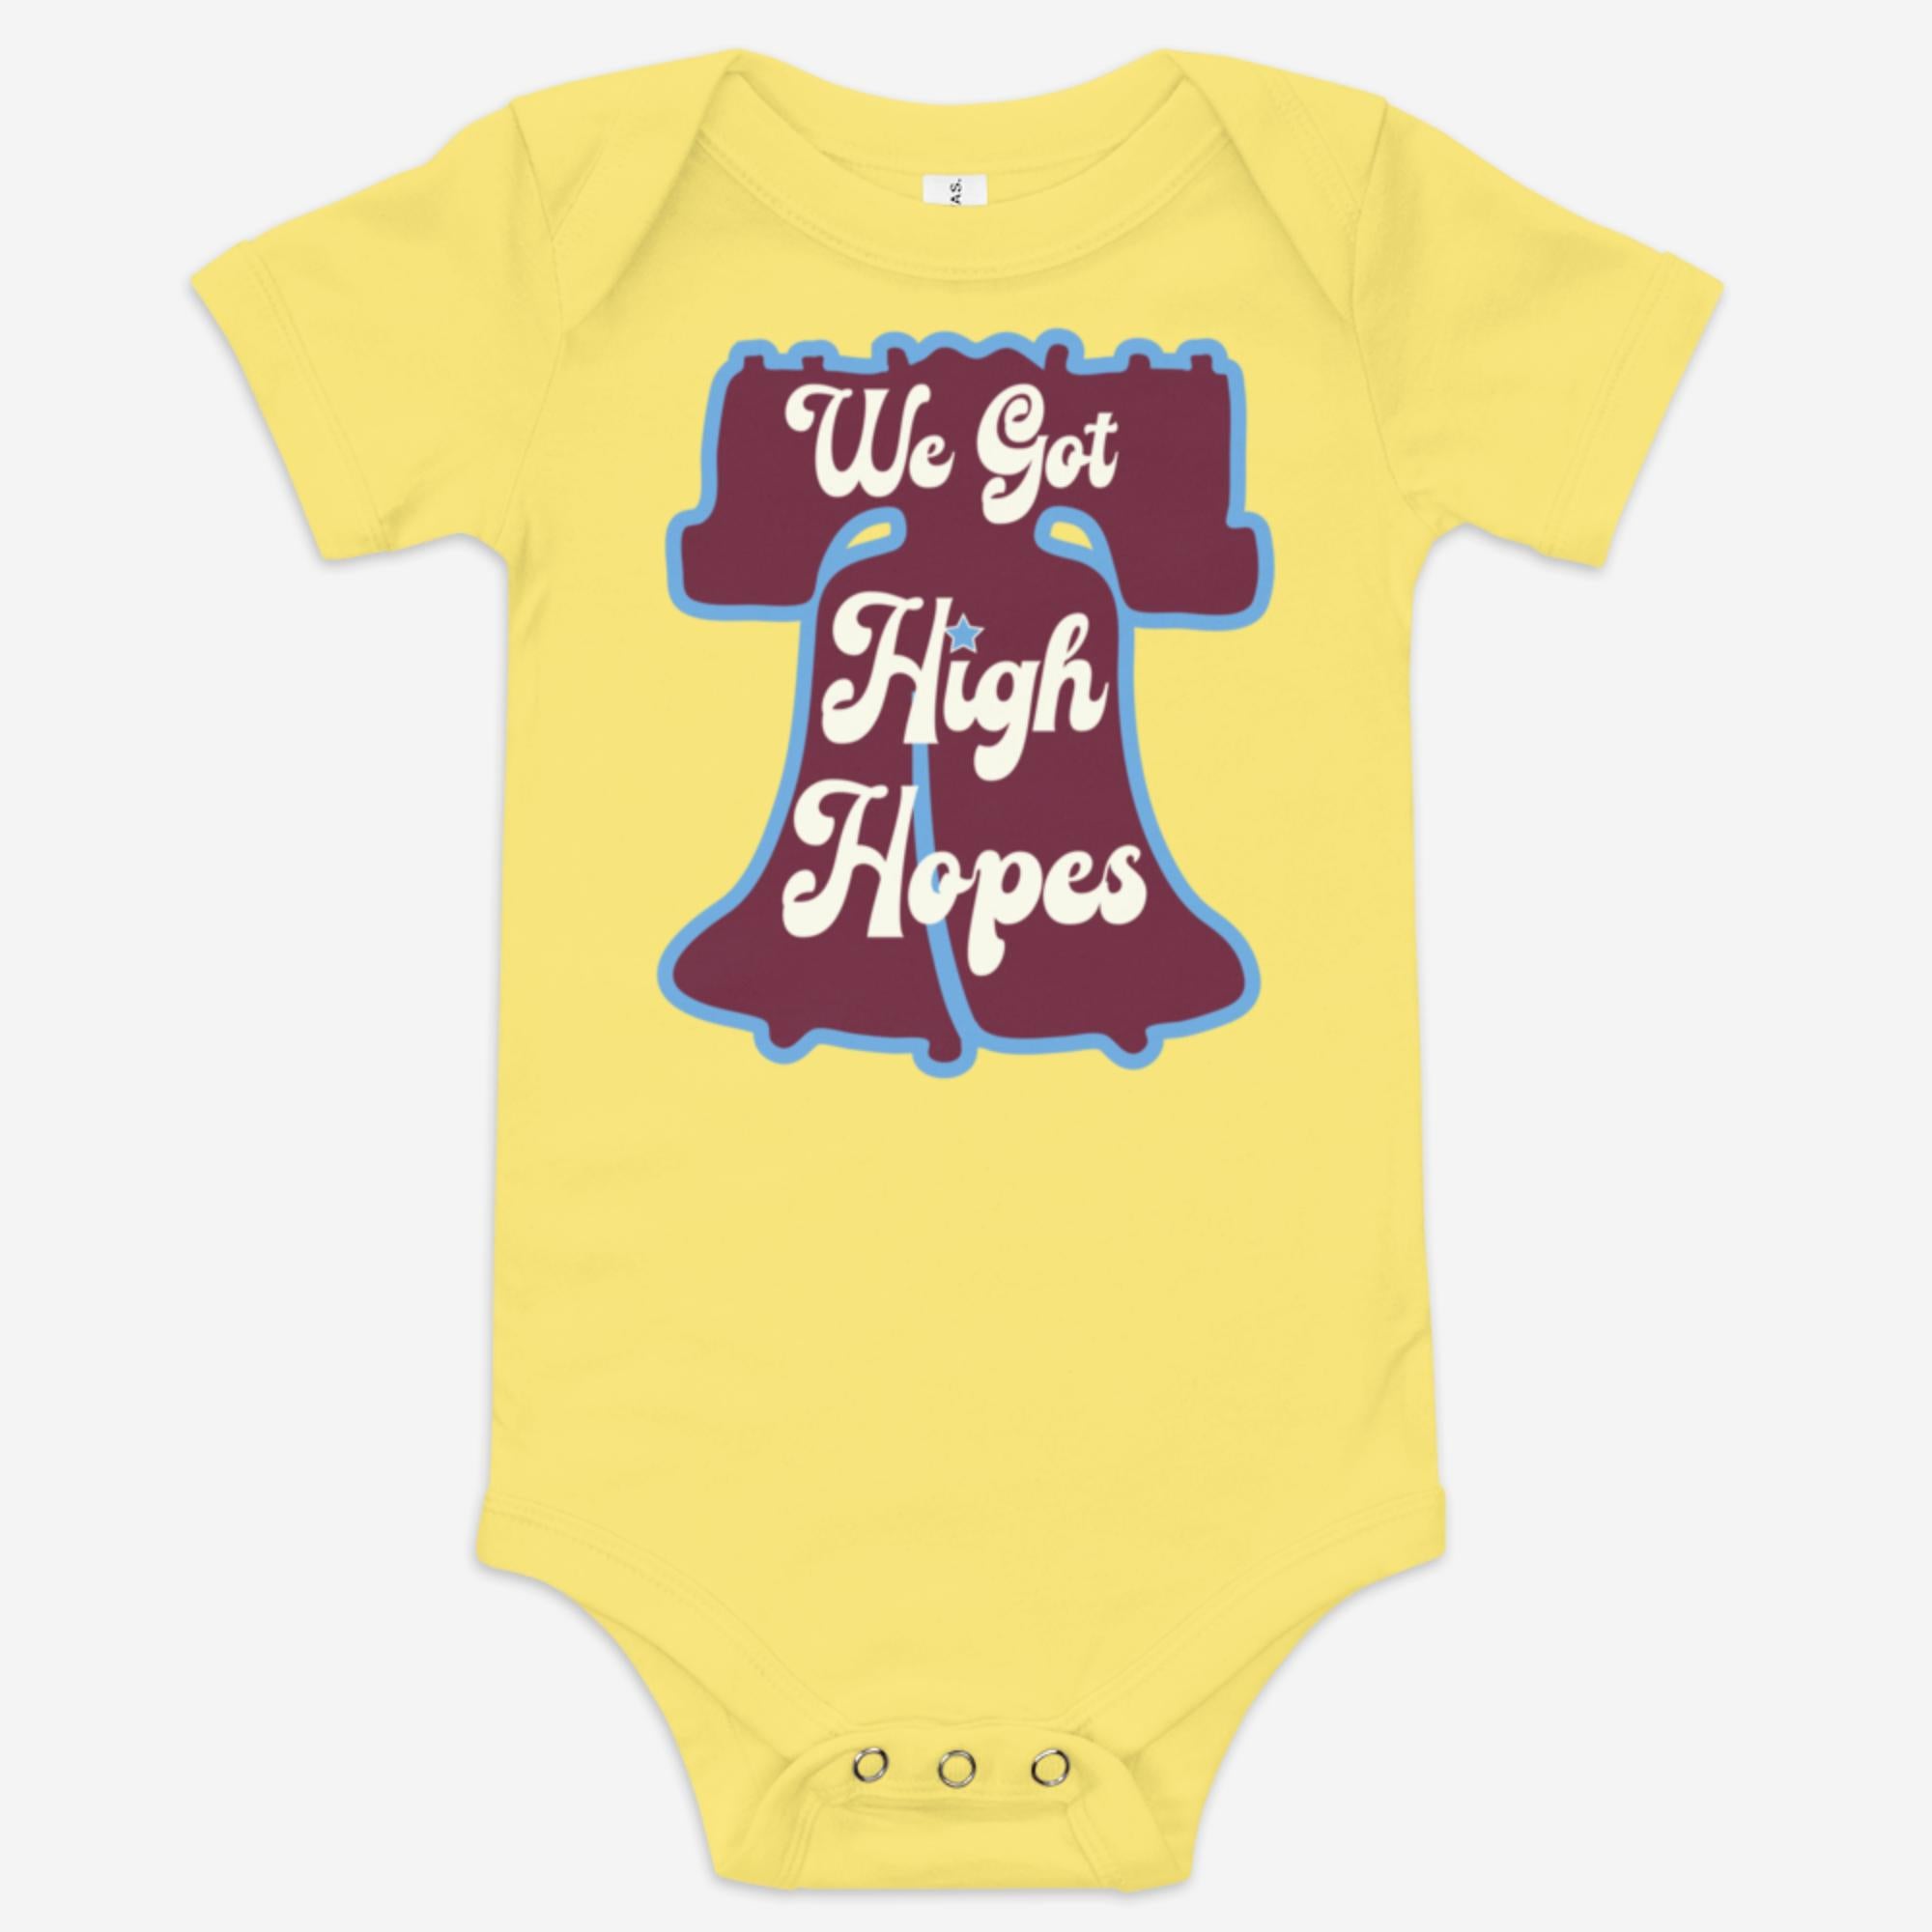 "High Hopes" Baby Onesie